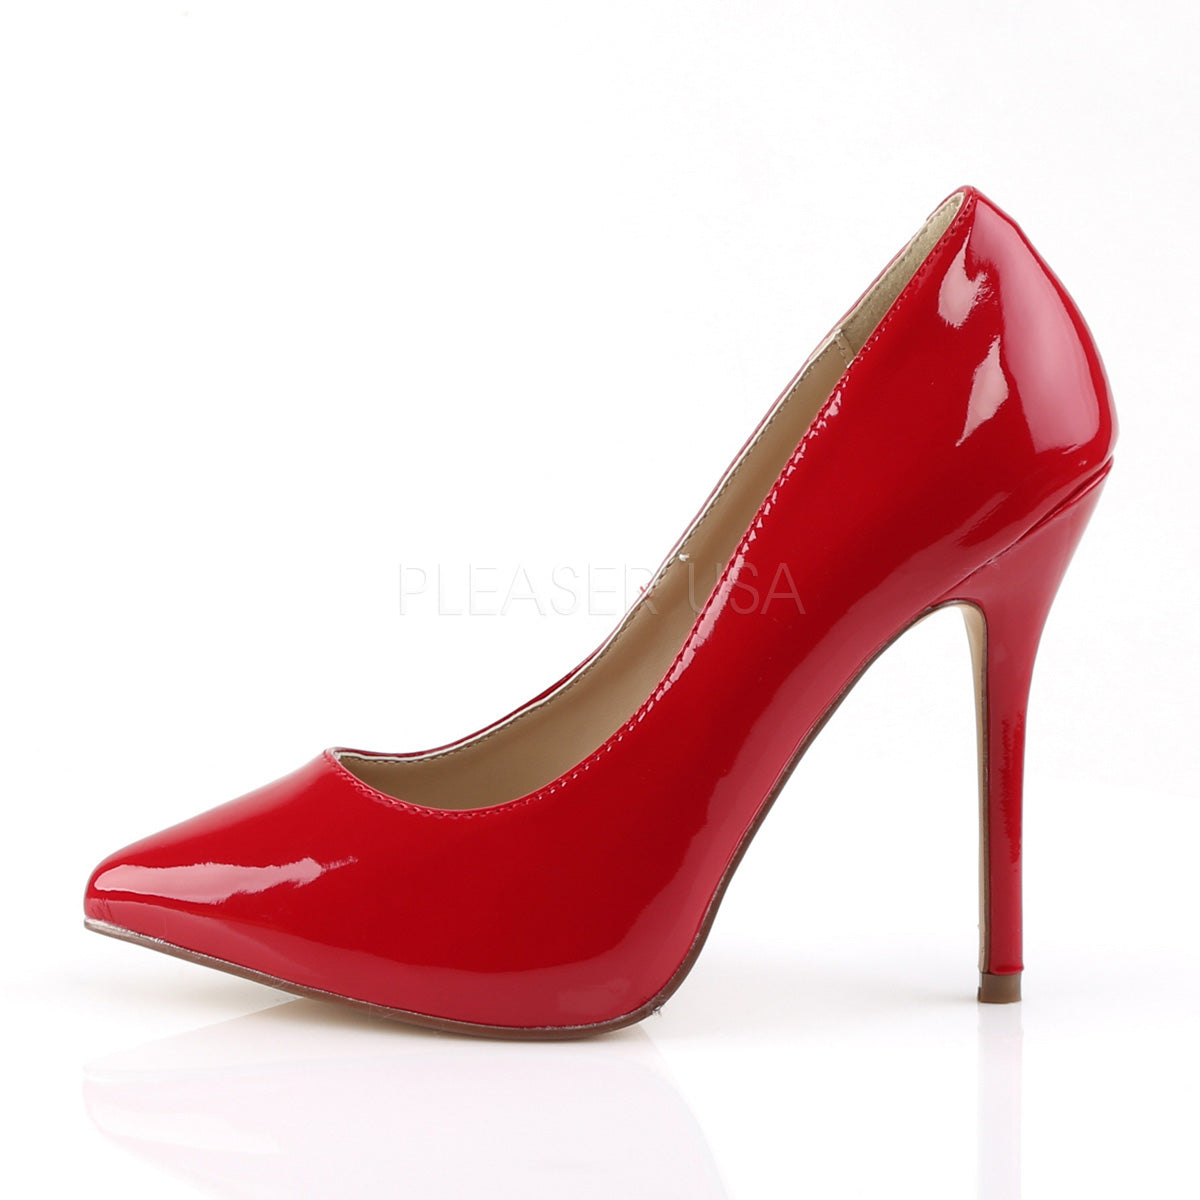 5 Inches Red Classic Stilettos